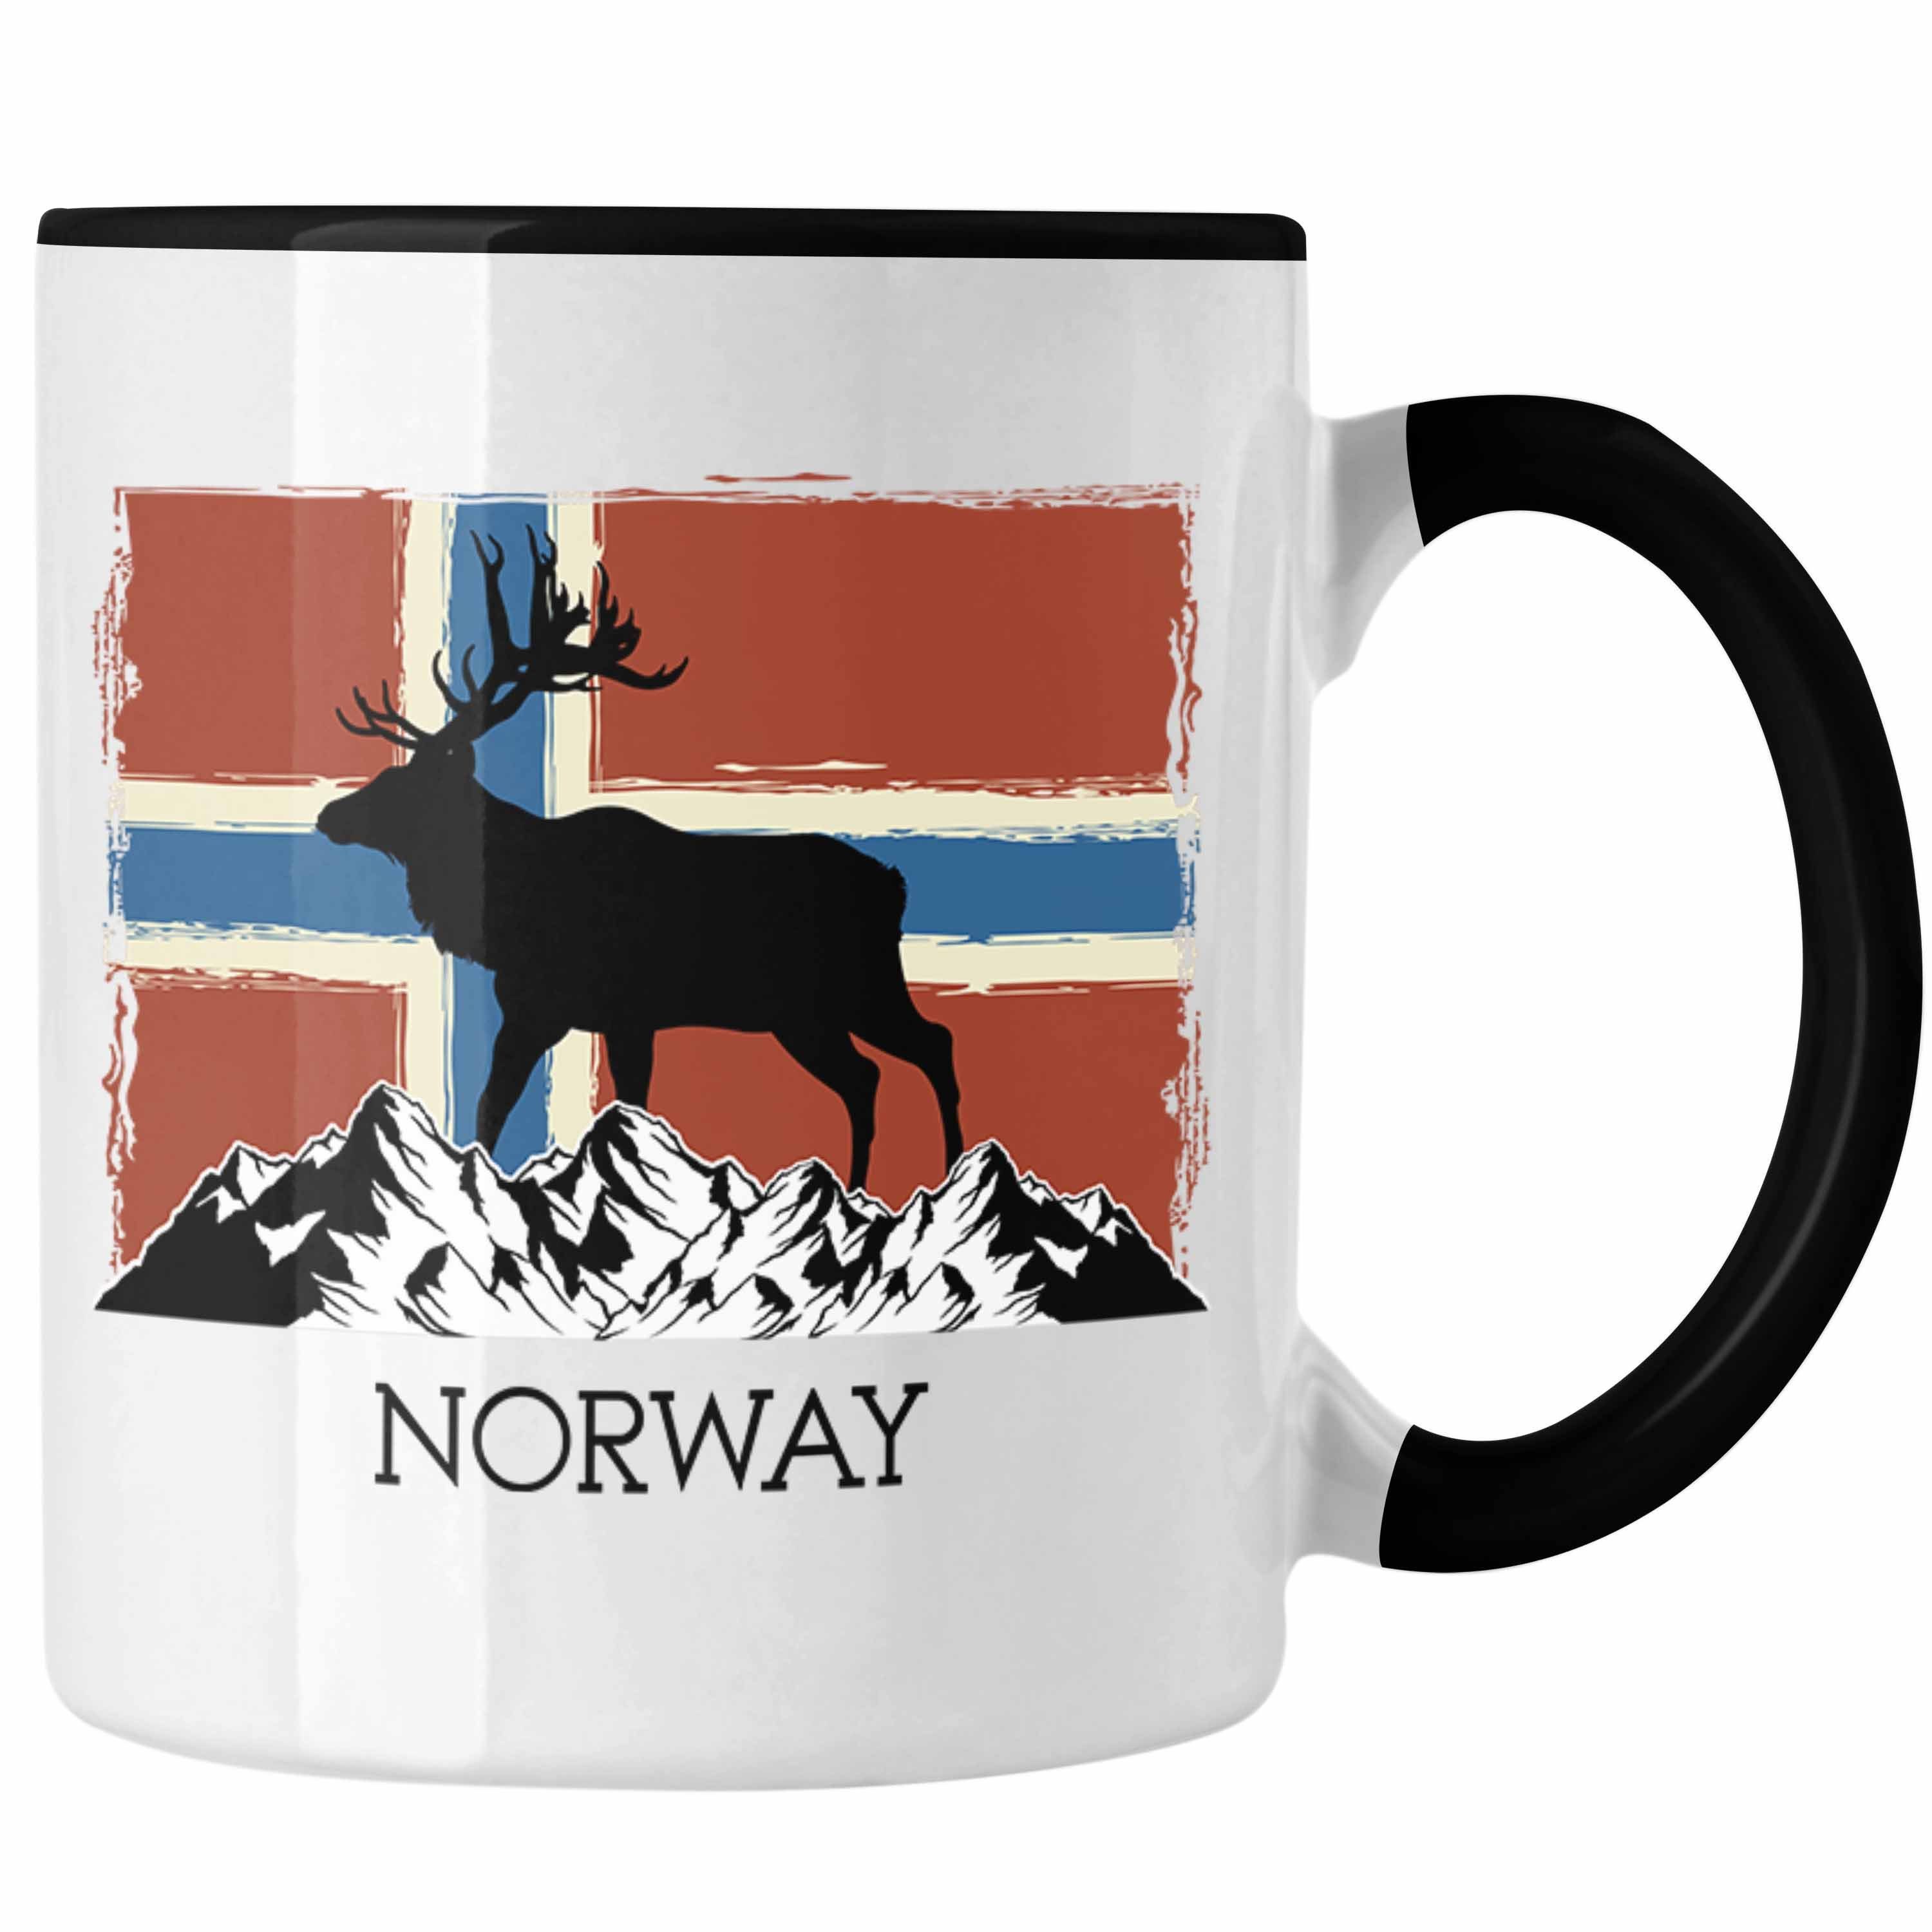 Trendation Tasse Trendation - Norwegen Geschenke Tasse Flagge Nordkap Elch Norway Schwarz | Teetassen